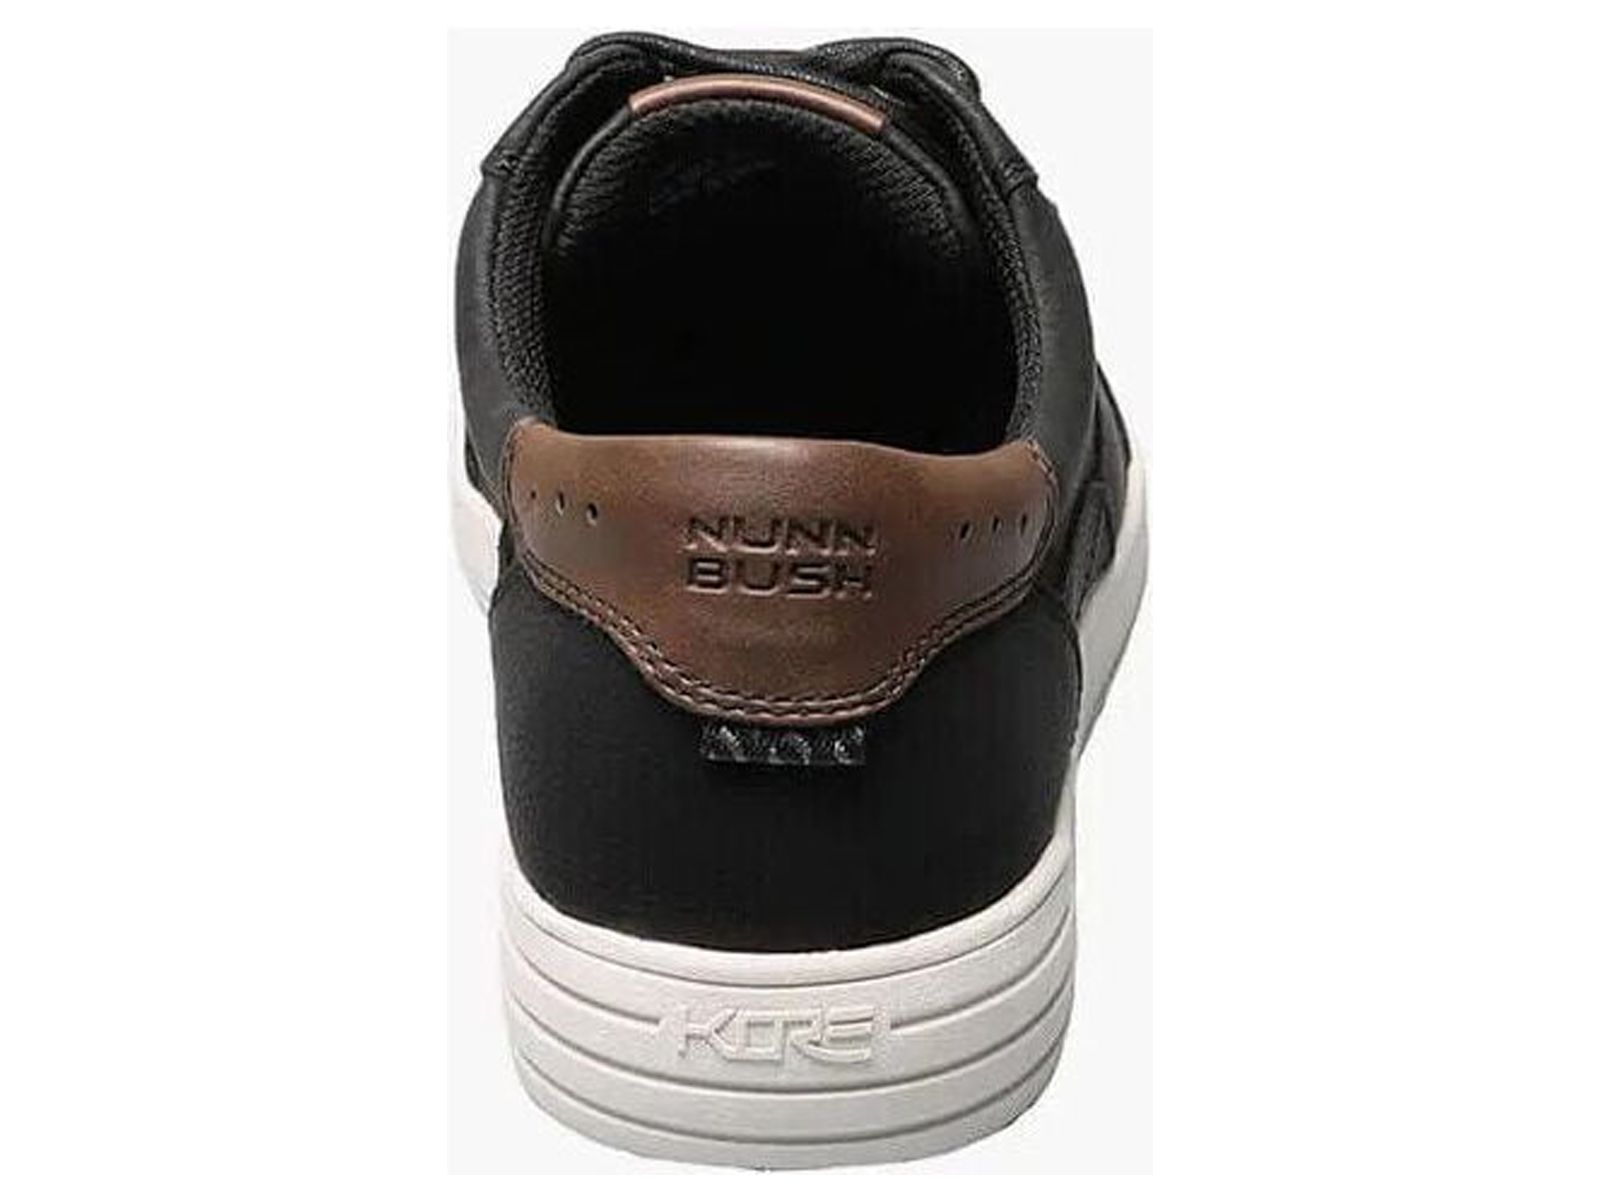 Nunn Bush KORE City Walk Lace To Toe Oxford Walking Sneaker Black 84819-001 - image 2 of 9